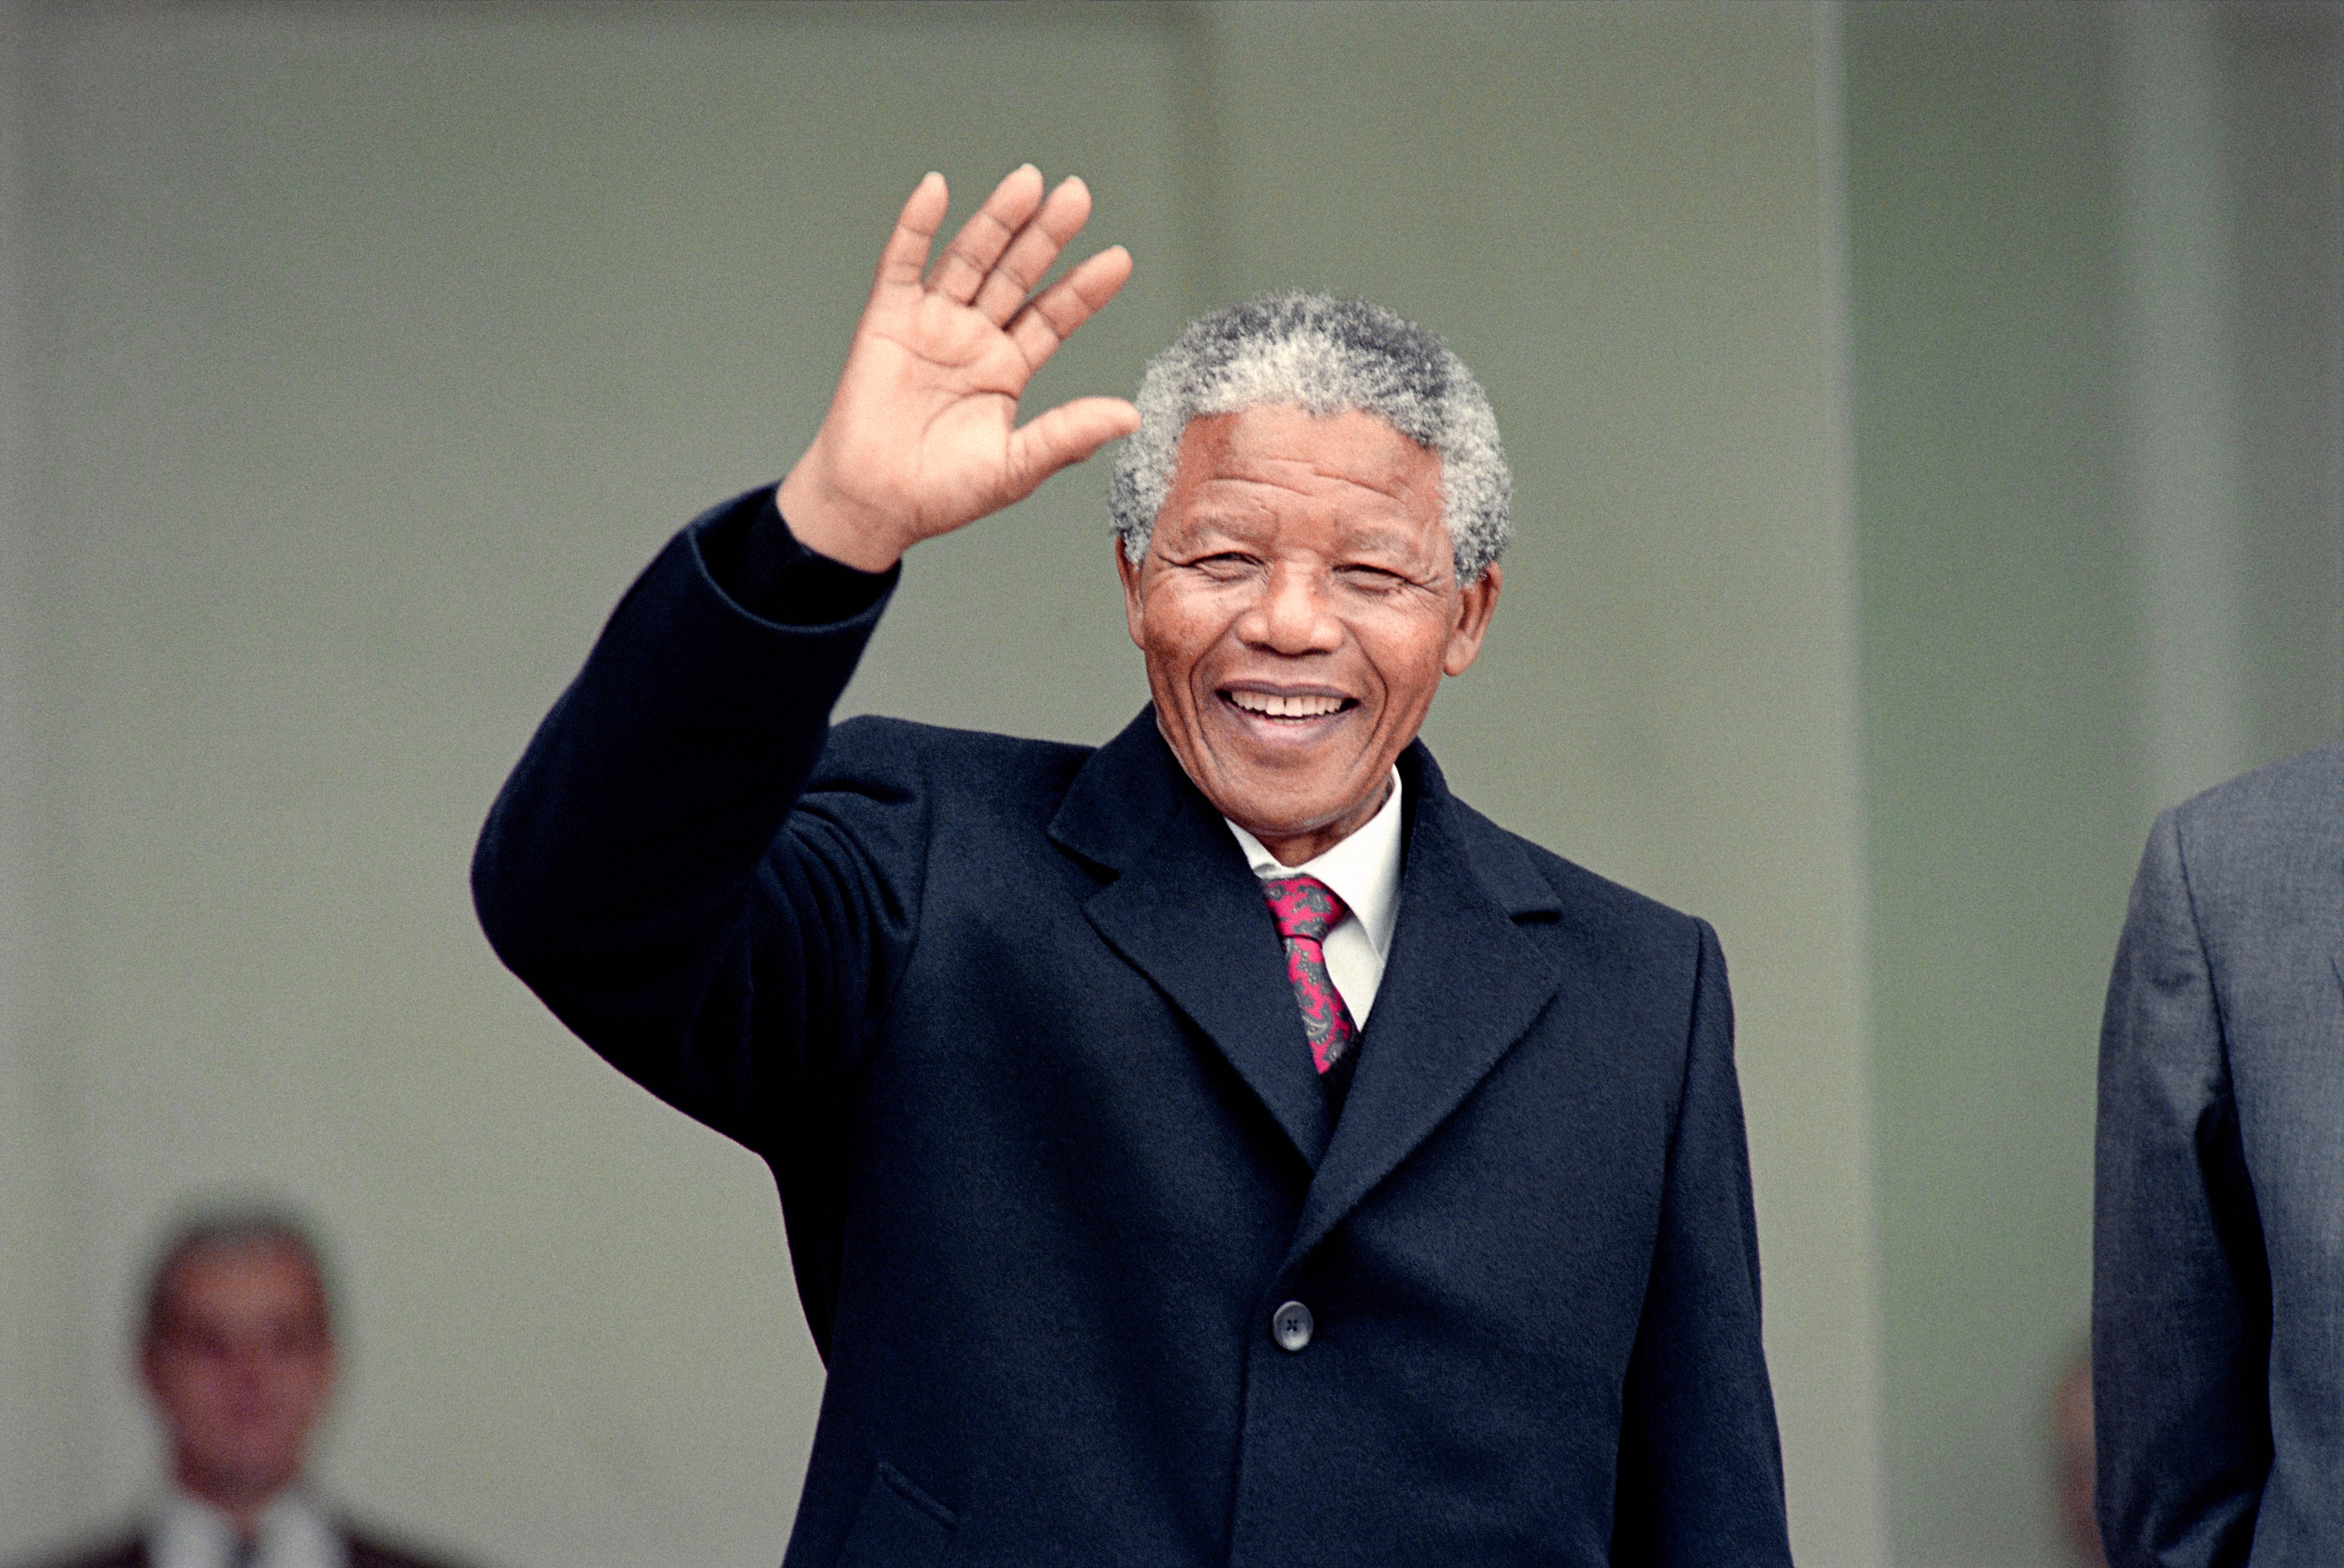 Nelson Mandela waves in Paris, June 7, 1990.